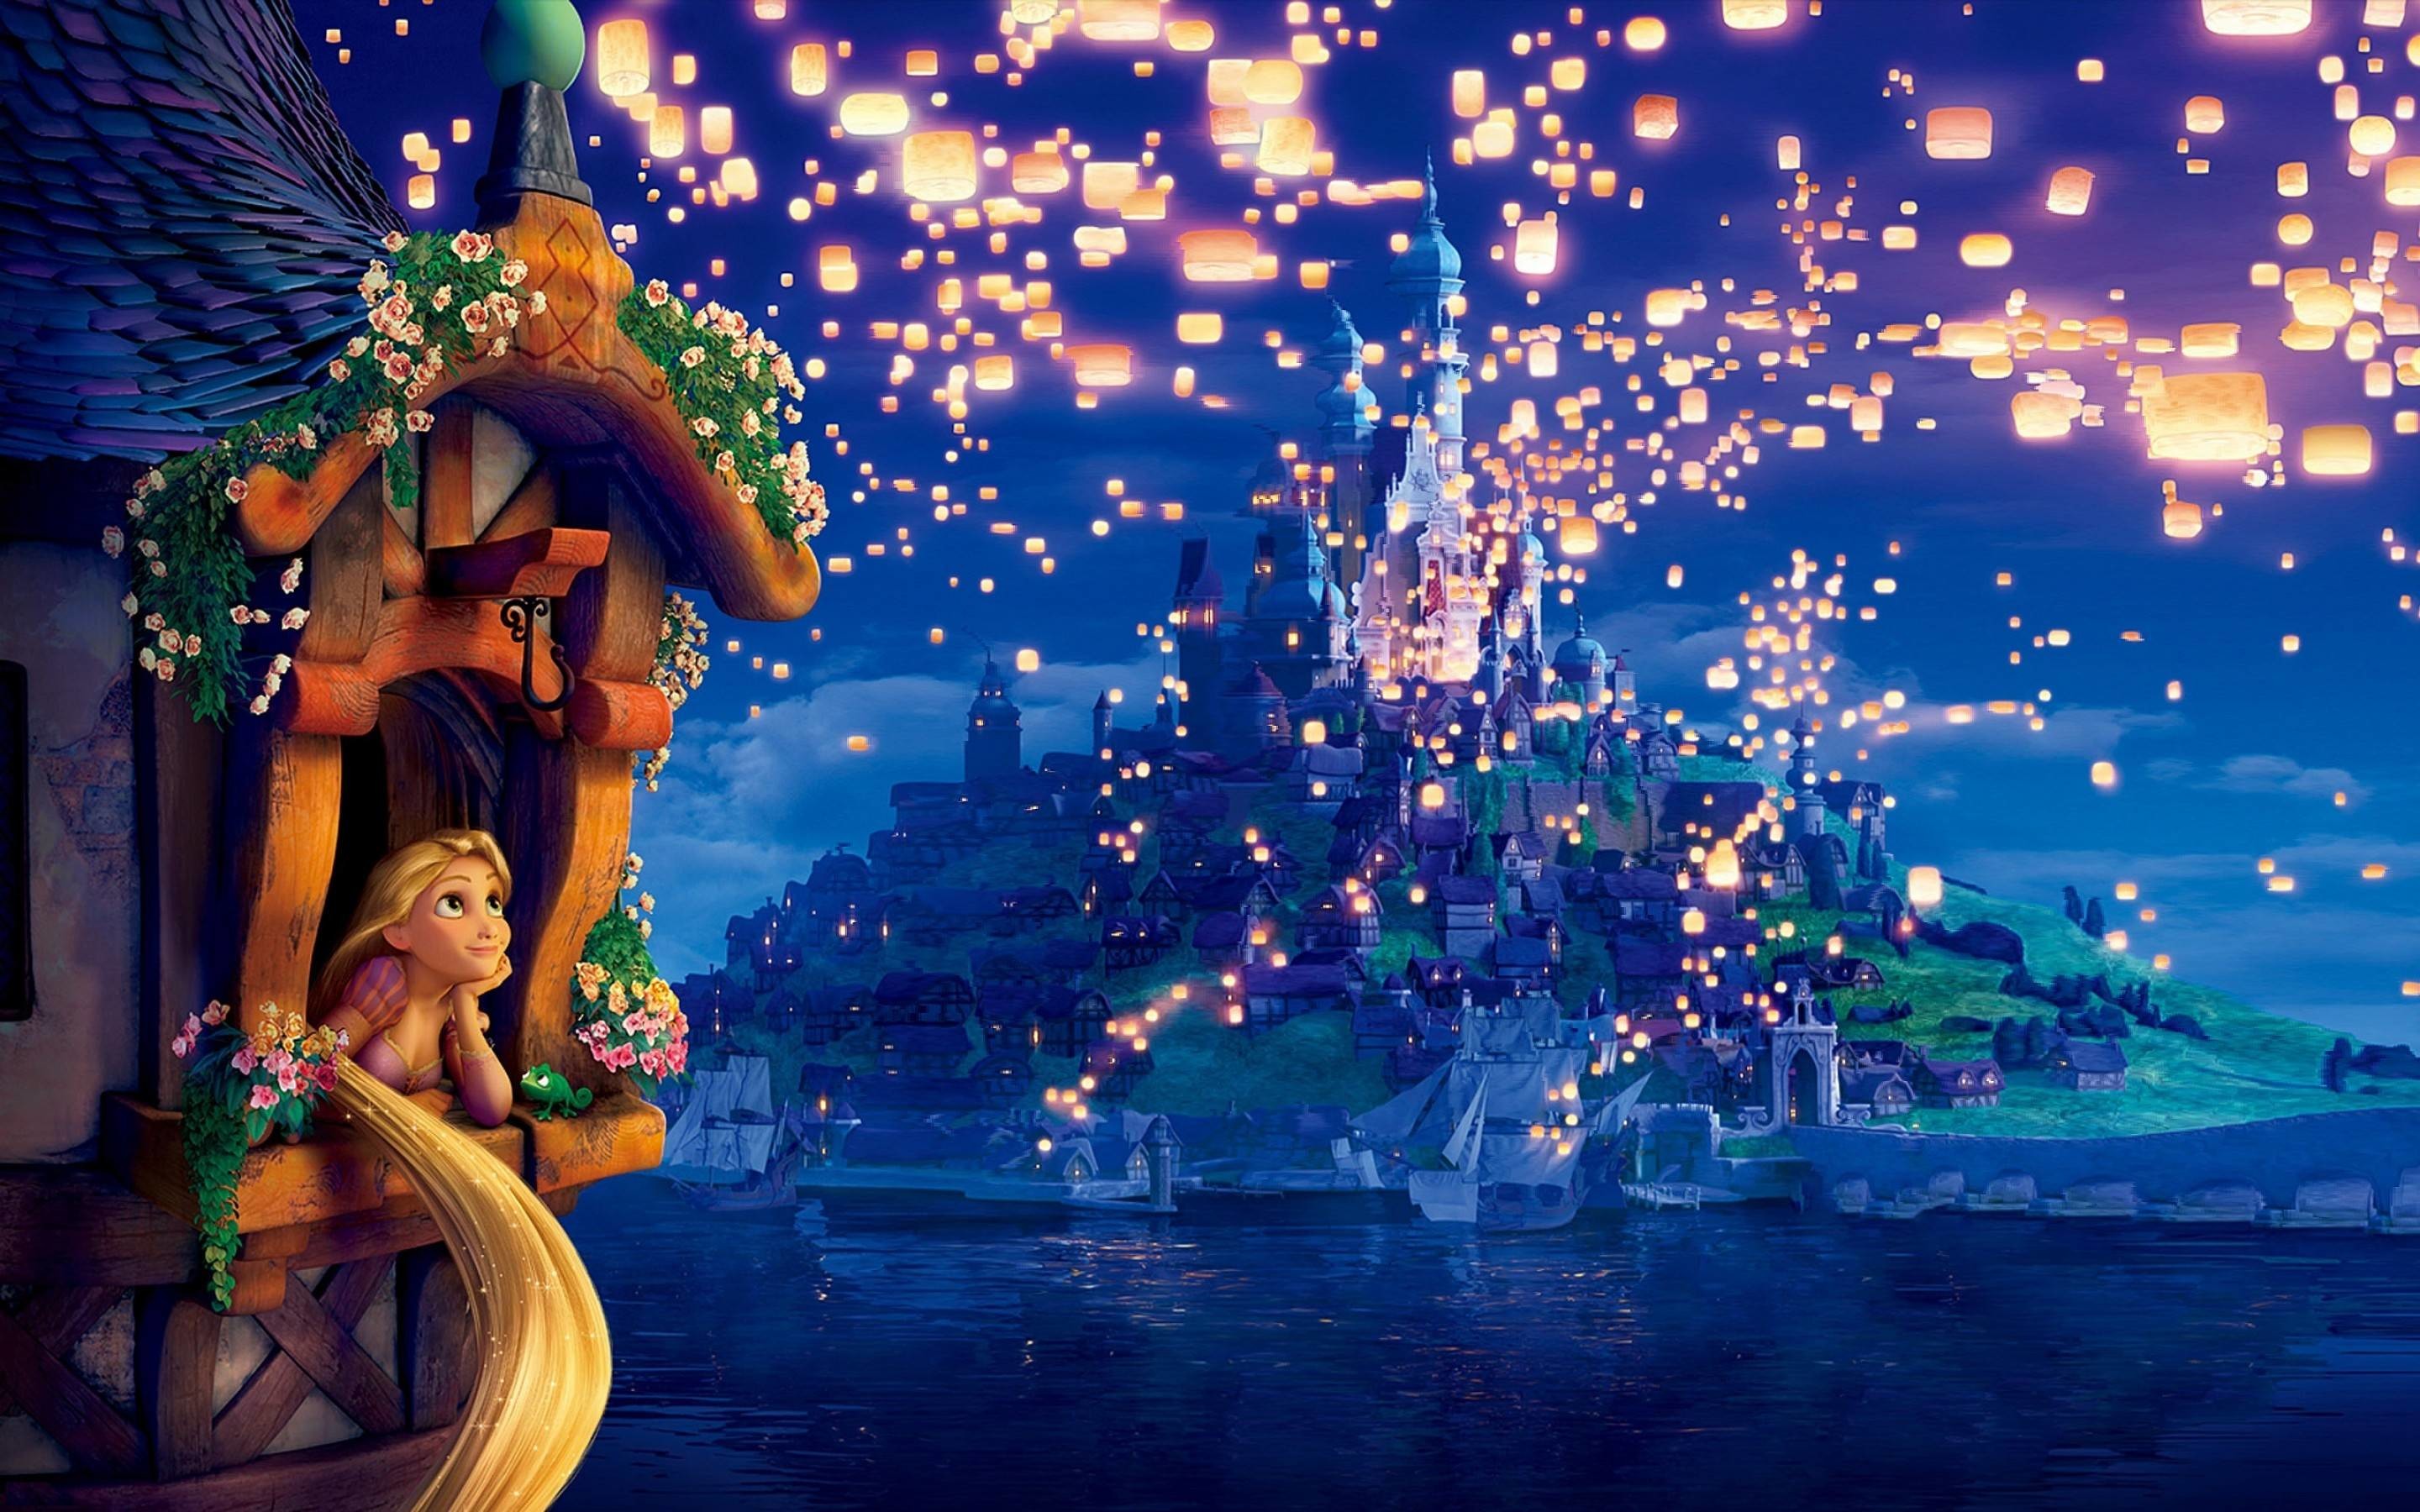 Disney Background For Puter Image